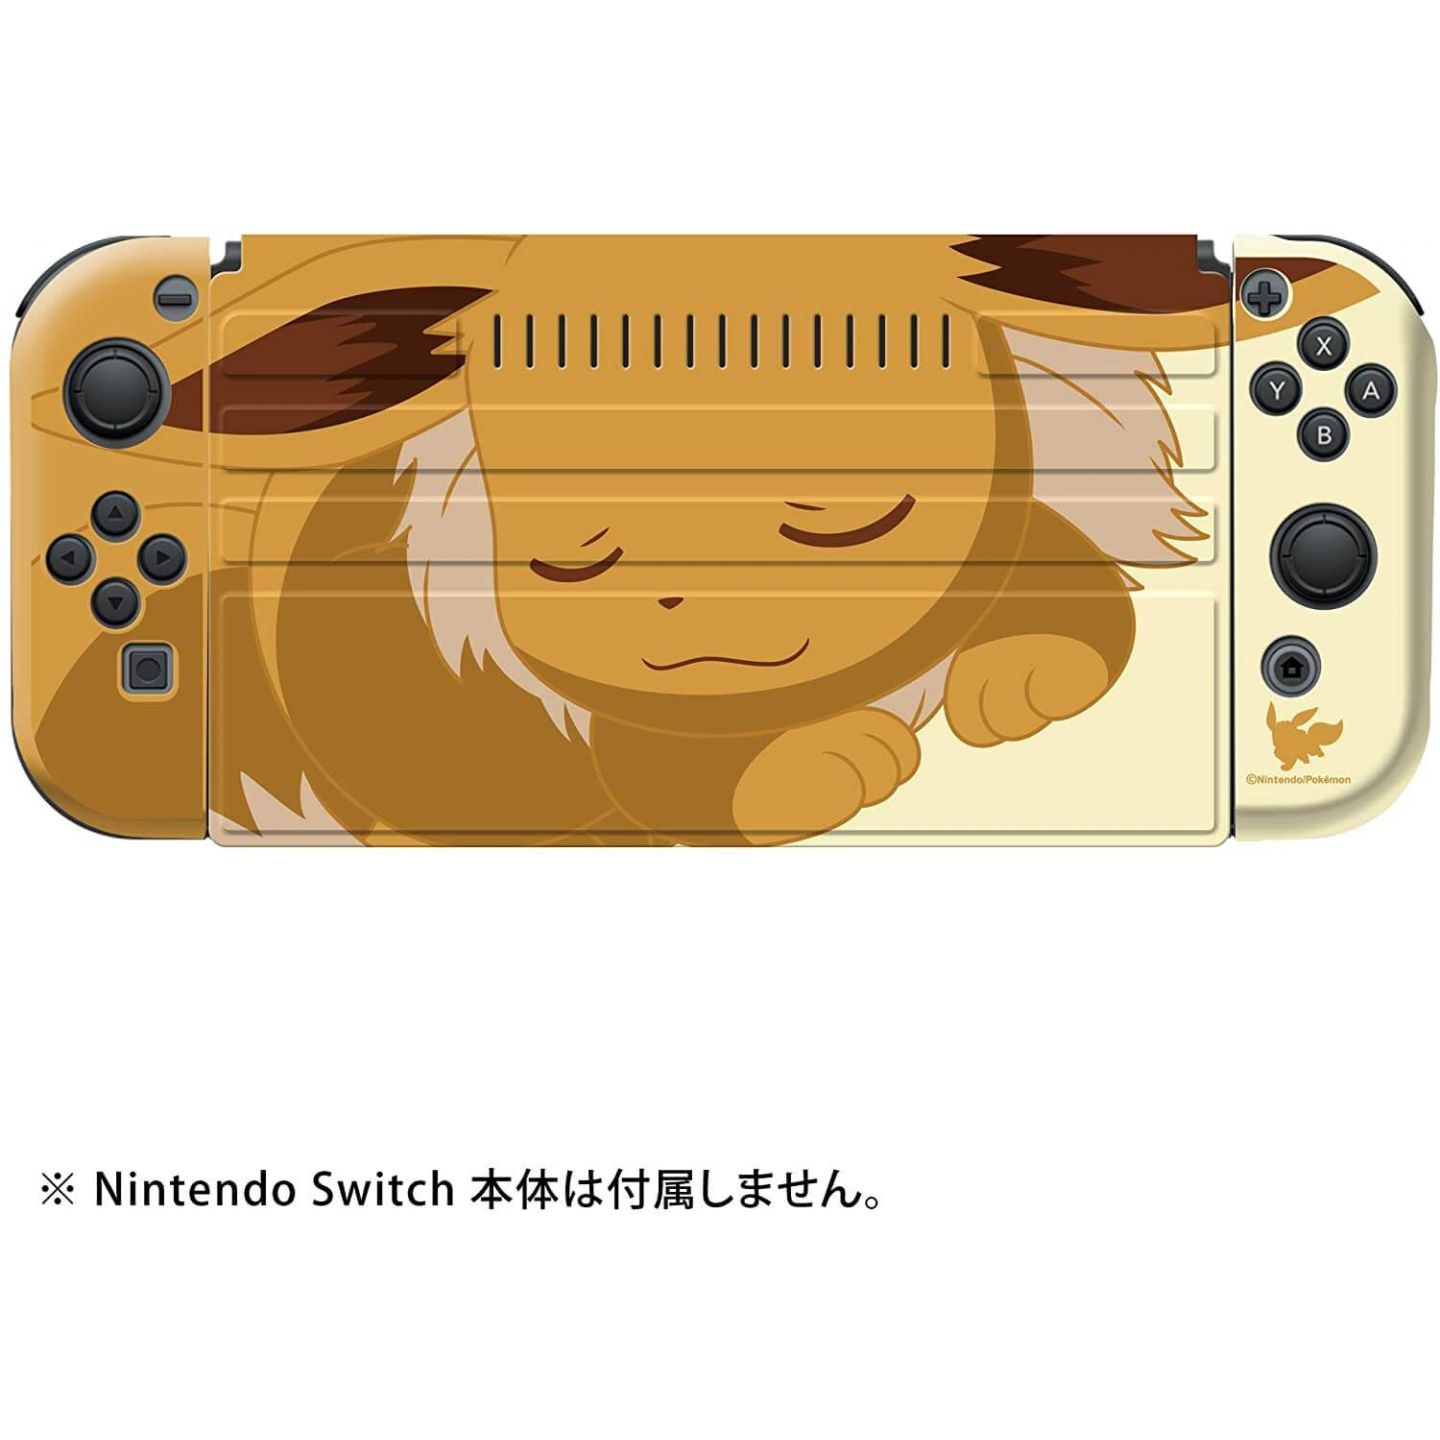 Keys Factory Cks 005 2 Kisekae Set Cover For Nintendo Switch Eevee Pokemon Series